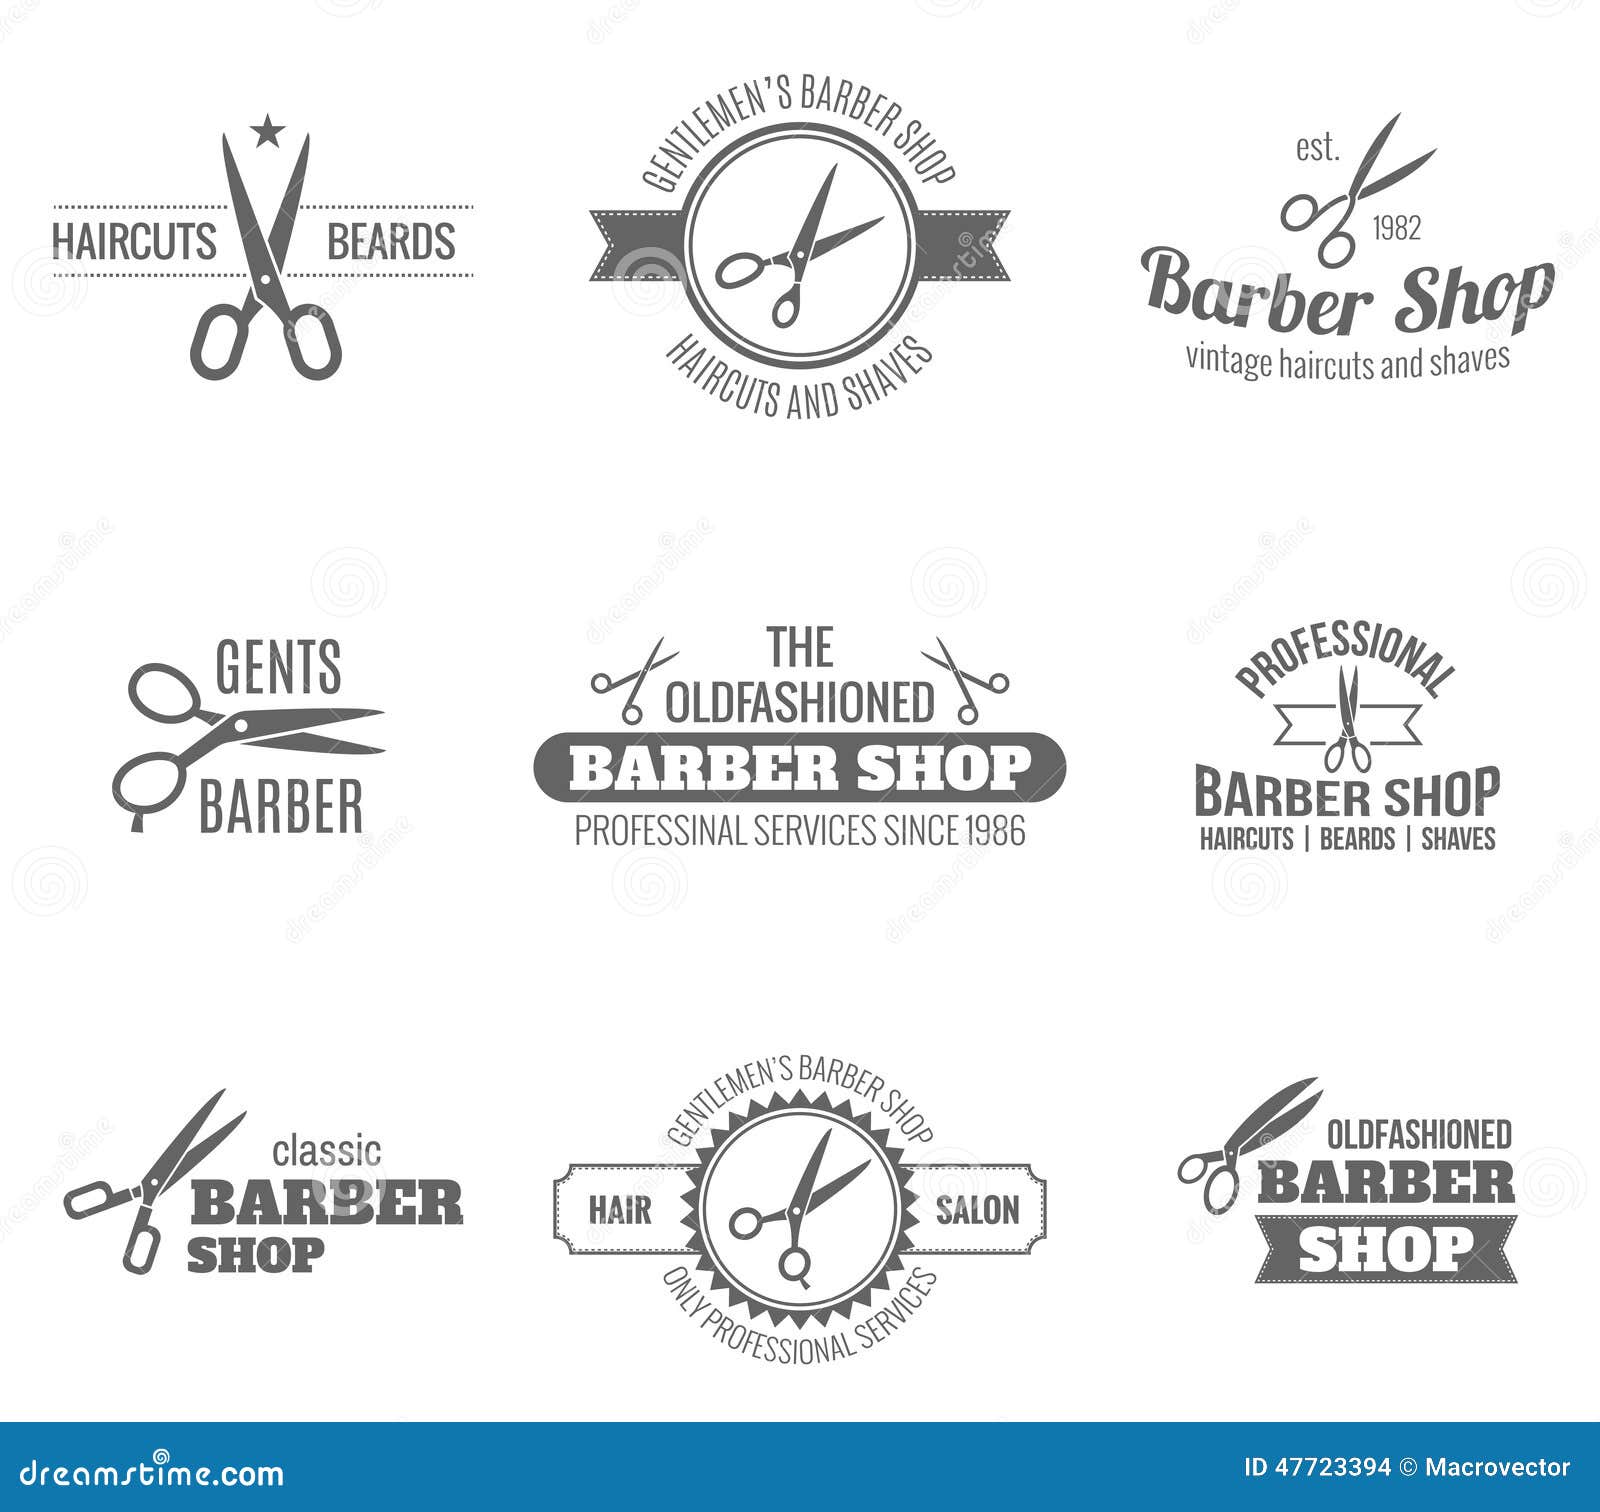 crosshairs barber shop